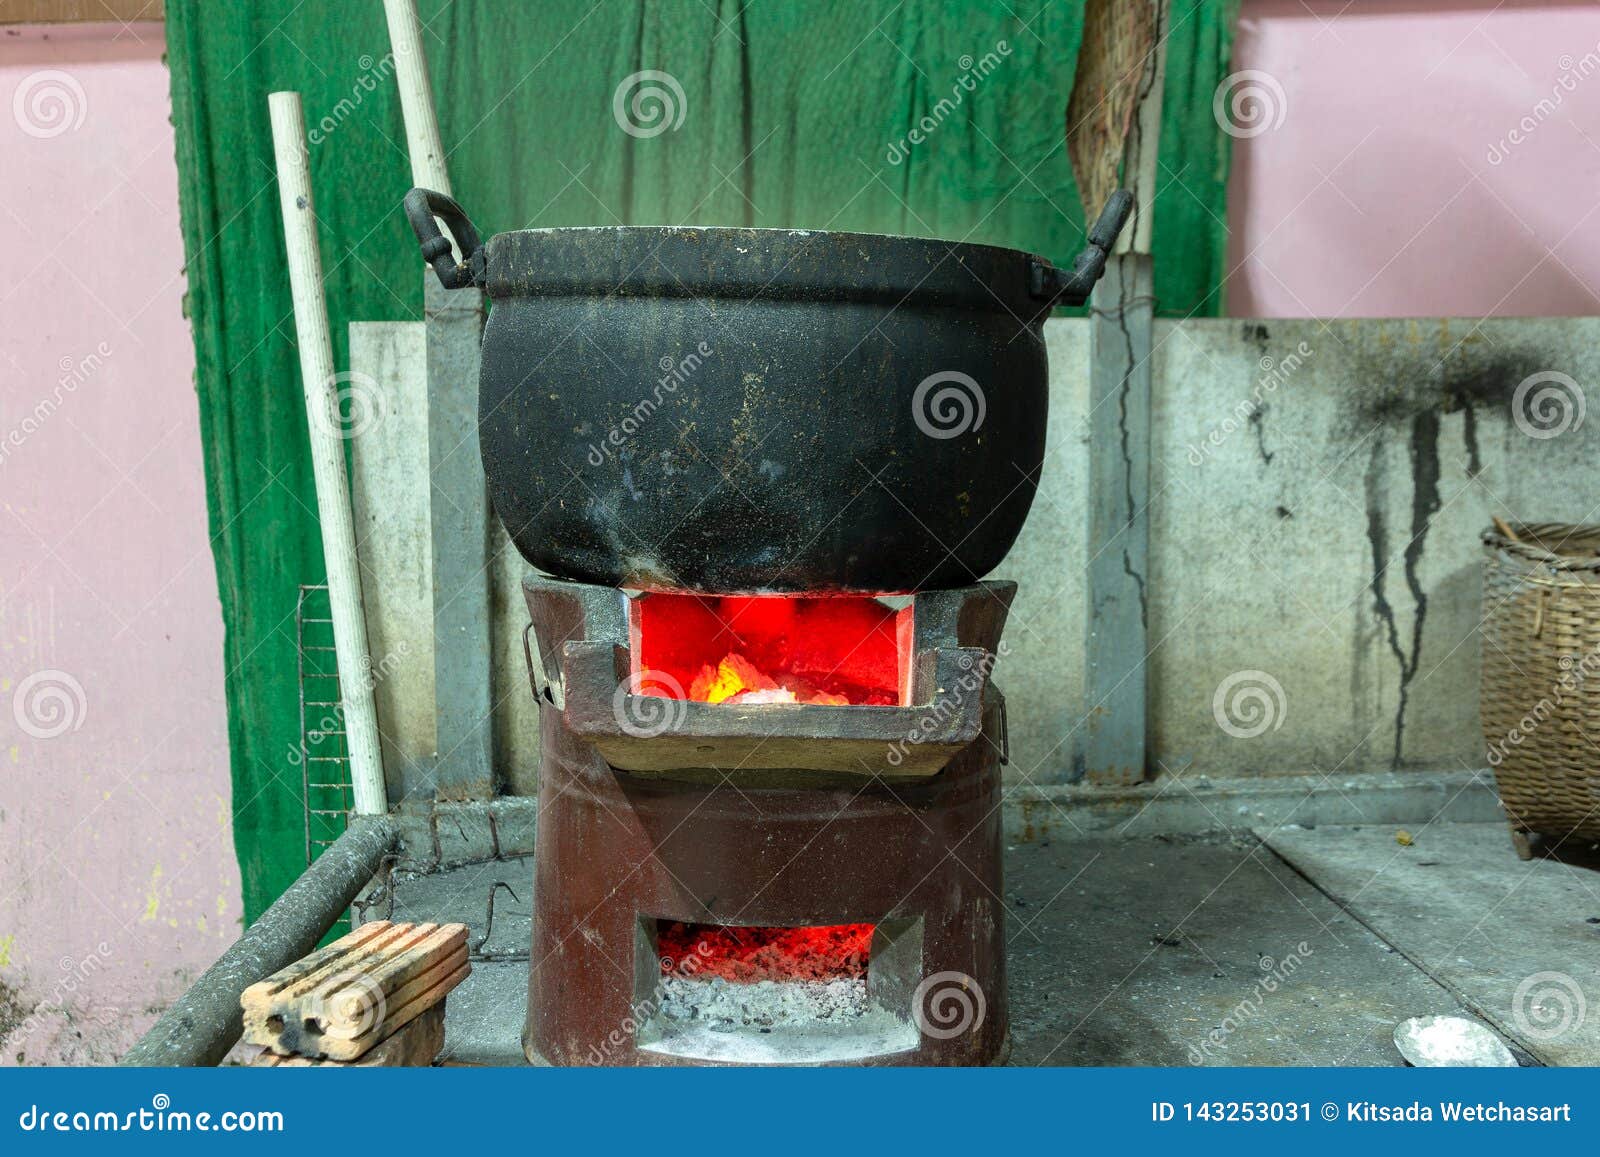 https://thumbs.dreamstime.com/z/cooking-aluminum-pot-boiling-charcoal-burning-stove-143253031.jpg